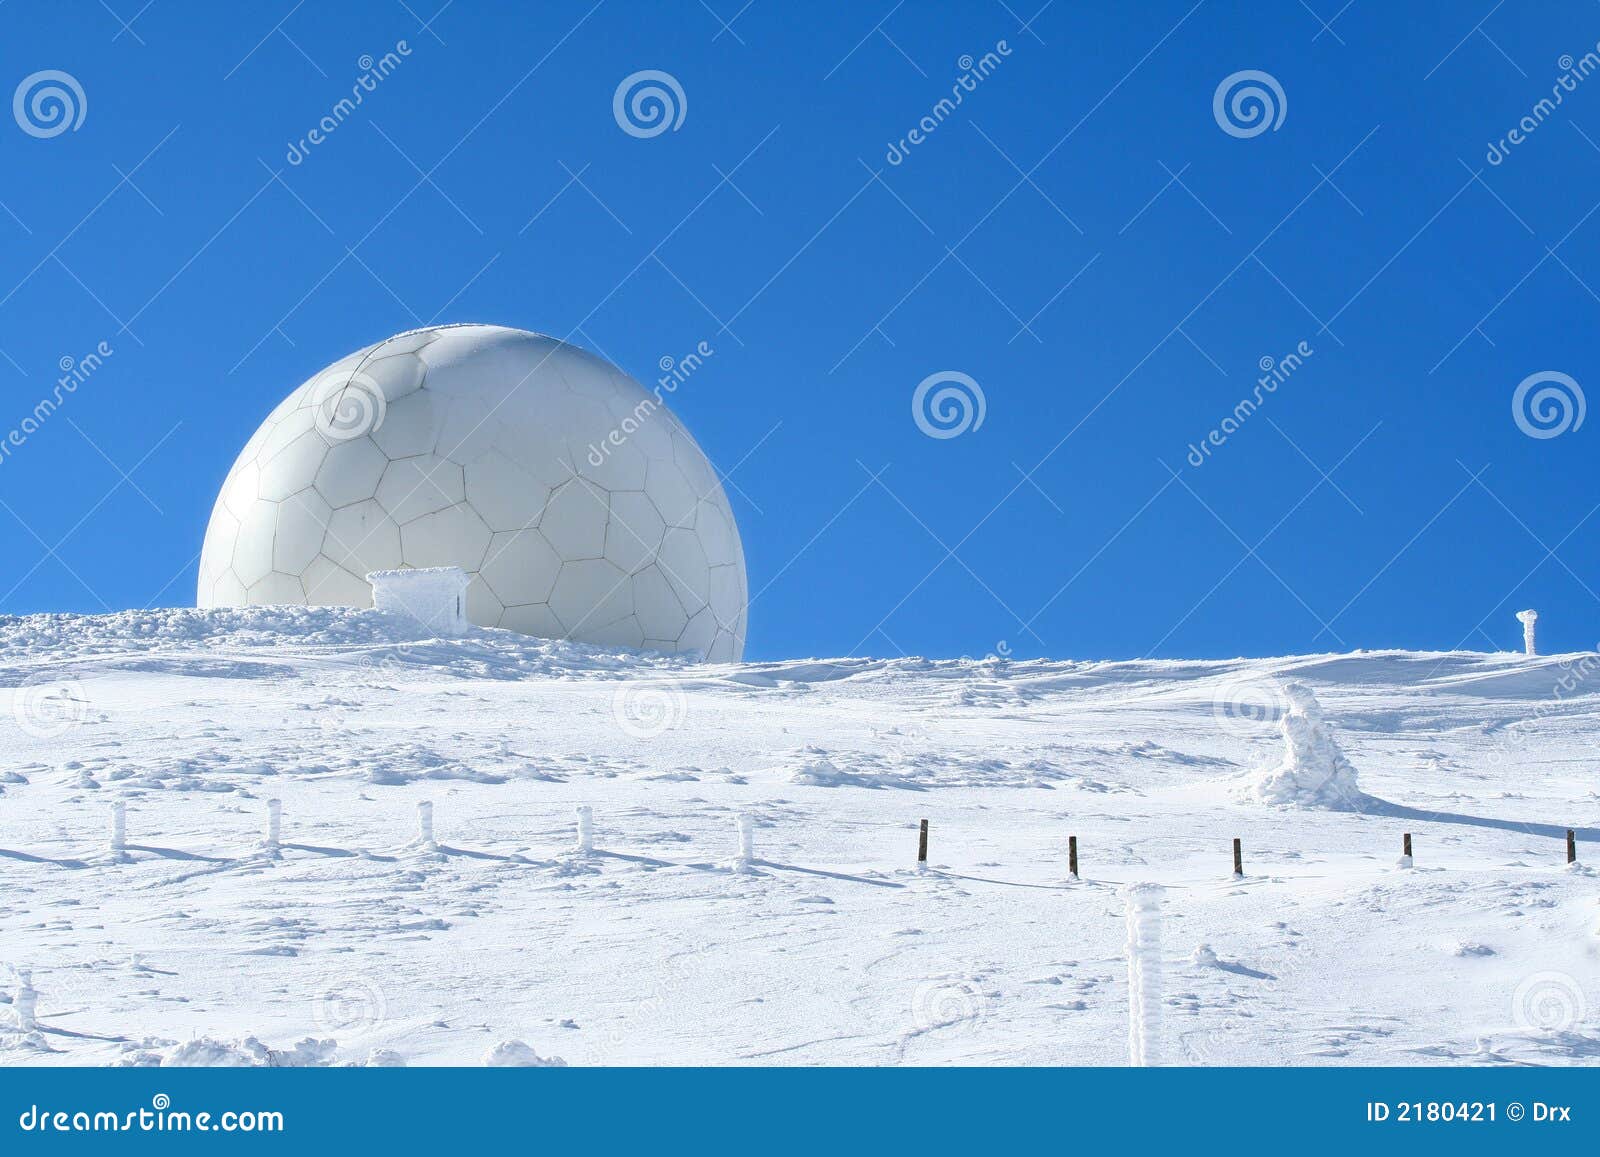 meteorology - weather station